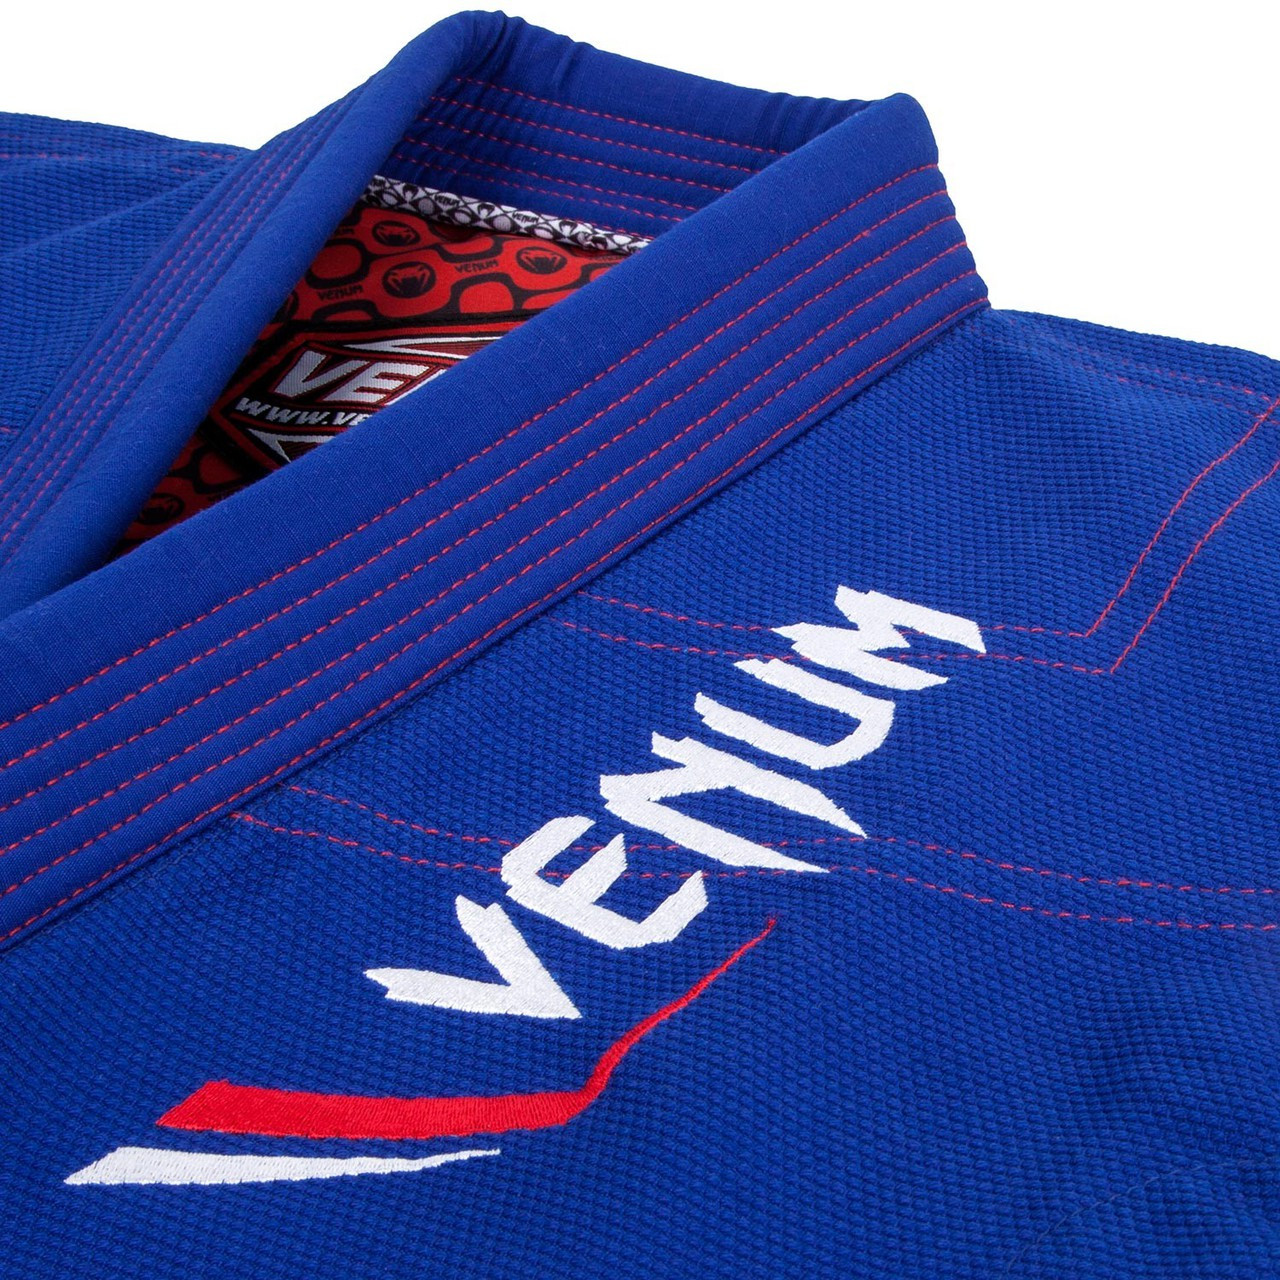 gi top Venum Elite Light BJJ GI in Blue is now available at www.thejiujitsushop.com

Enjoy Free Shipping from The Jiu Jitsu Shop today! 